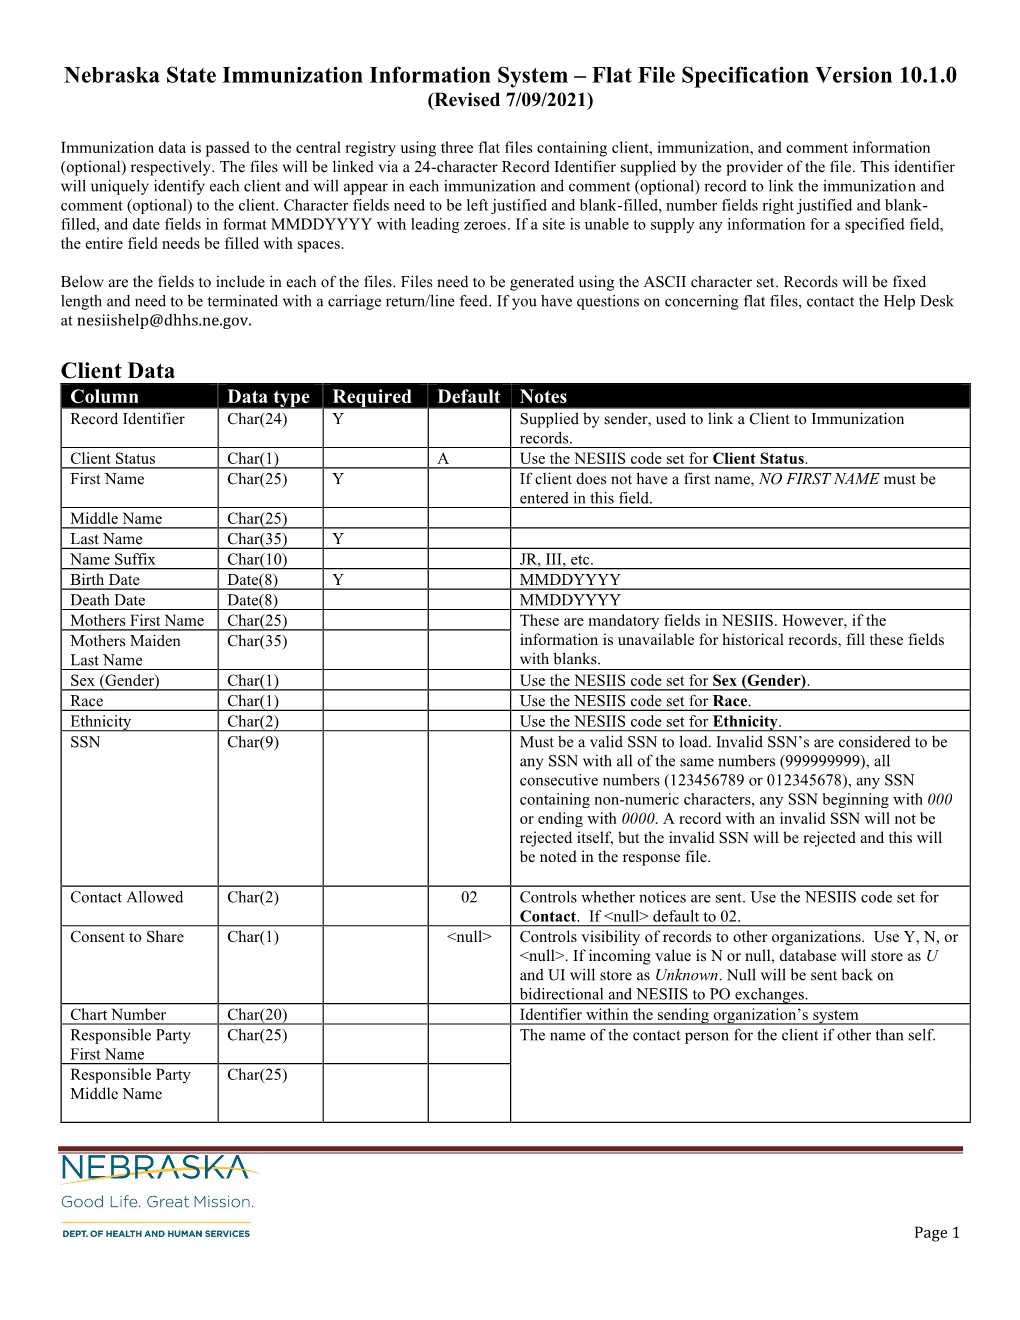 Nebraska State Immunization Information System – Flat File Specification Version 10.1.0 (Revised 7/09/2021)